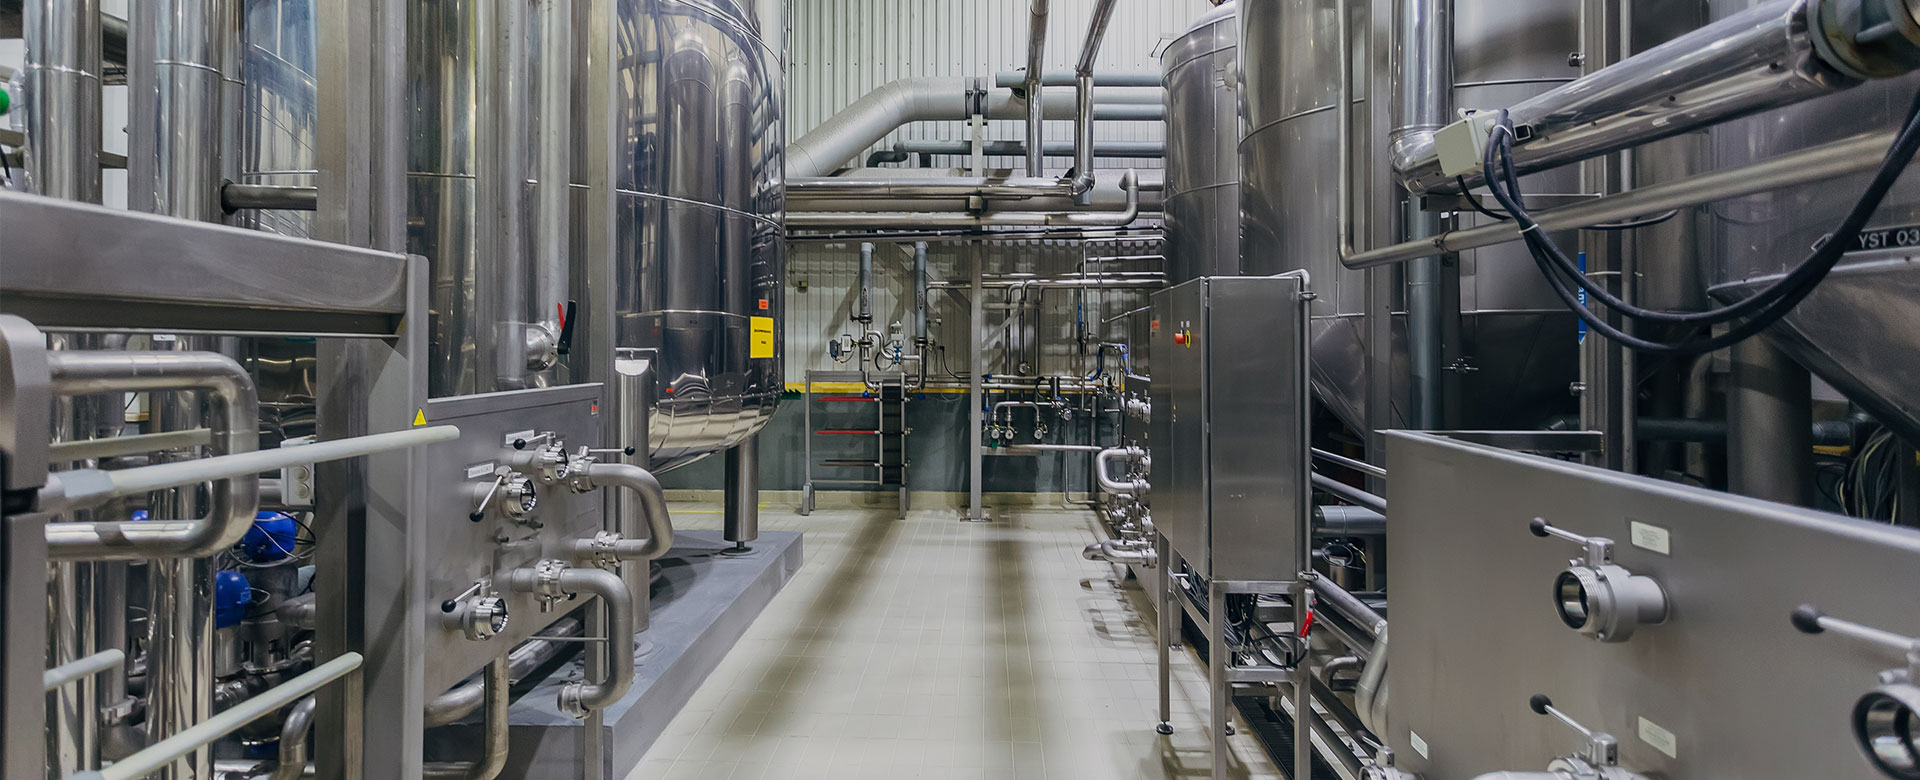 Industrial stainless steel vats in modern brewery